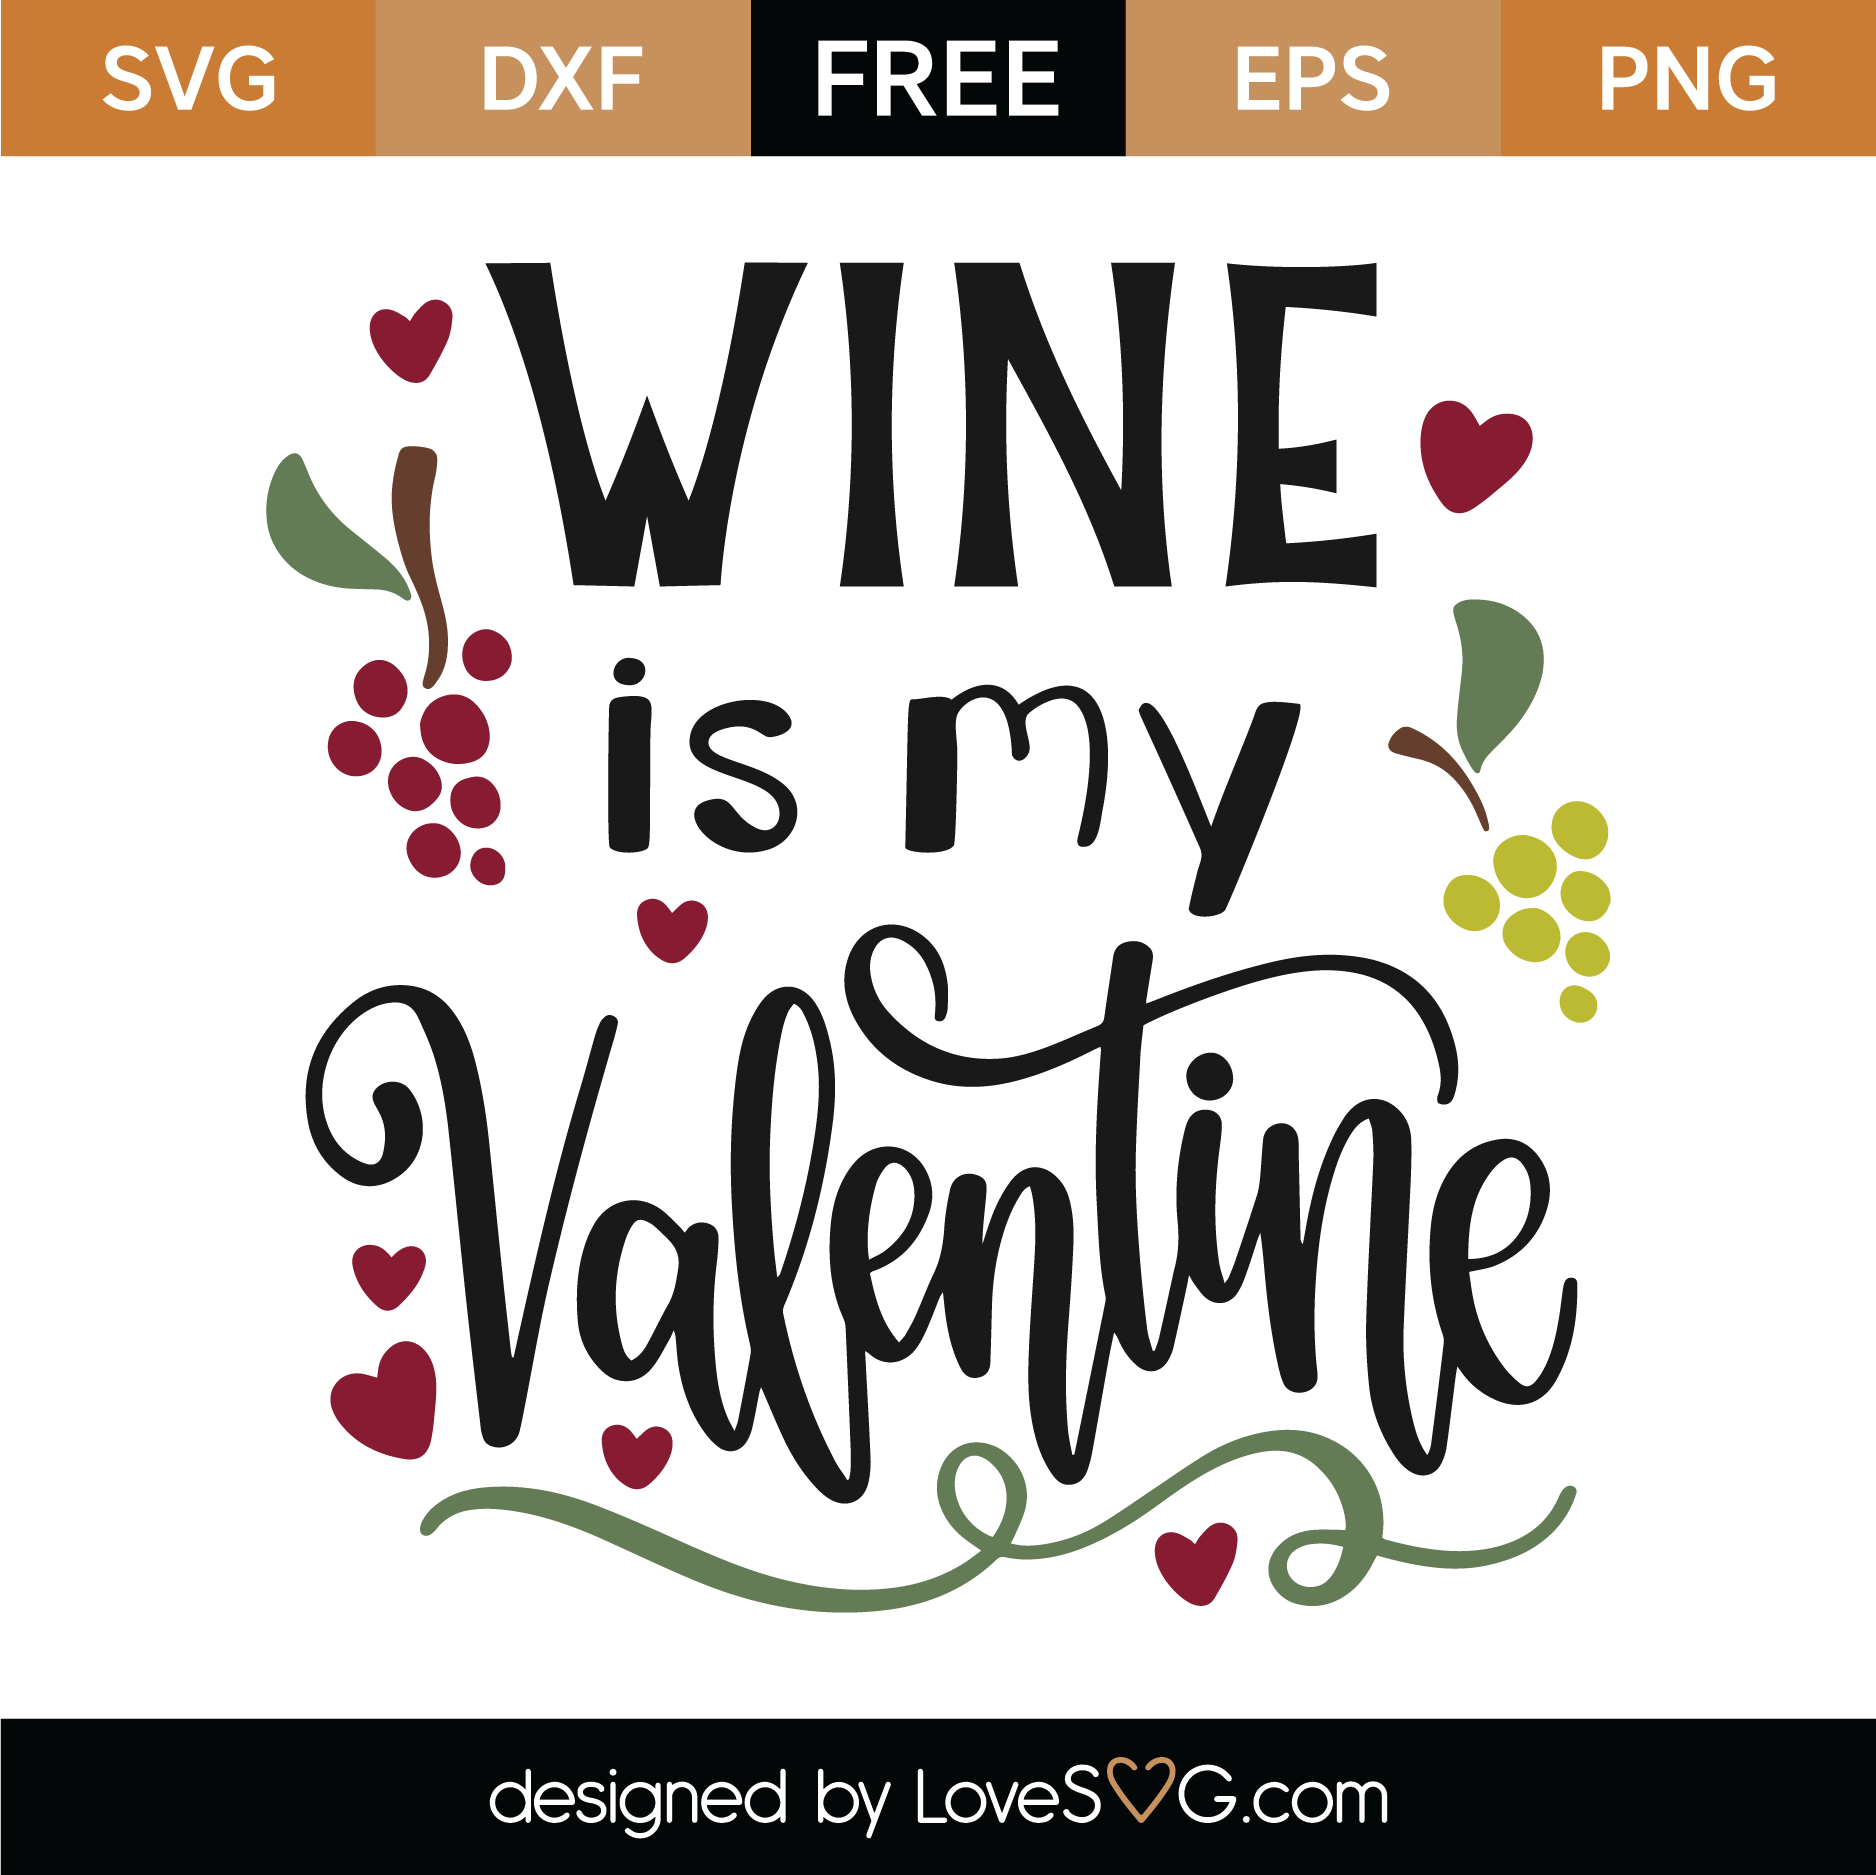 Download Free Wine Is My Valentine SVG Cut File | Lovesvg.com